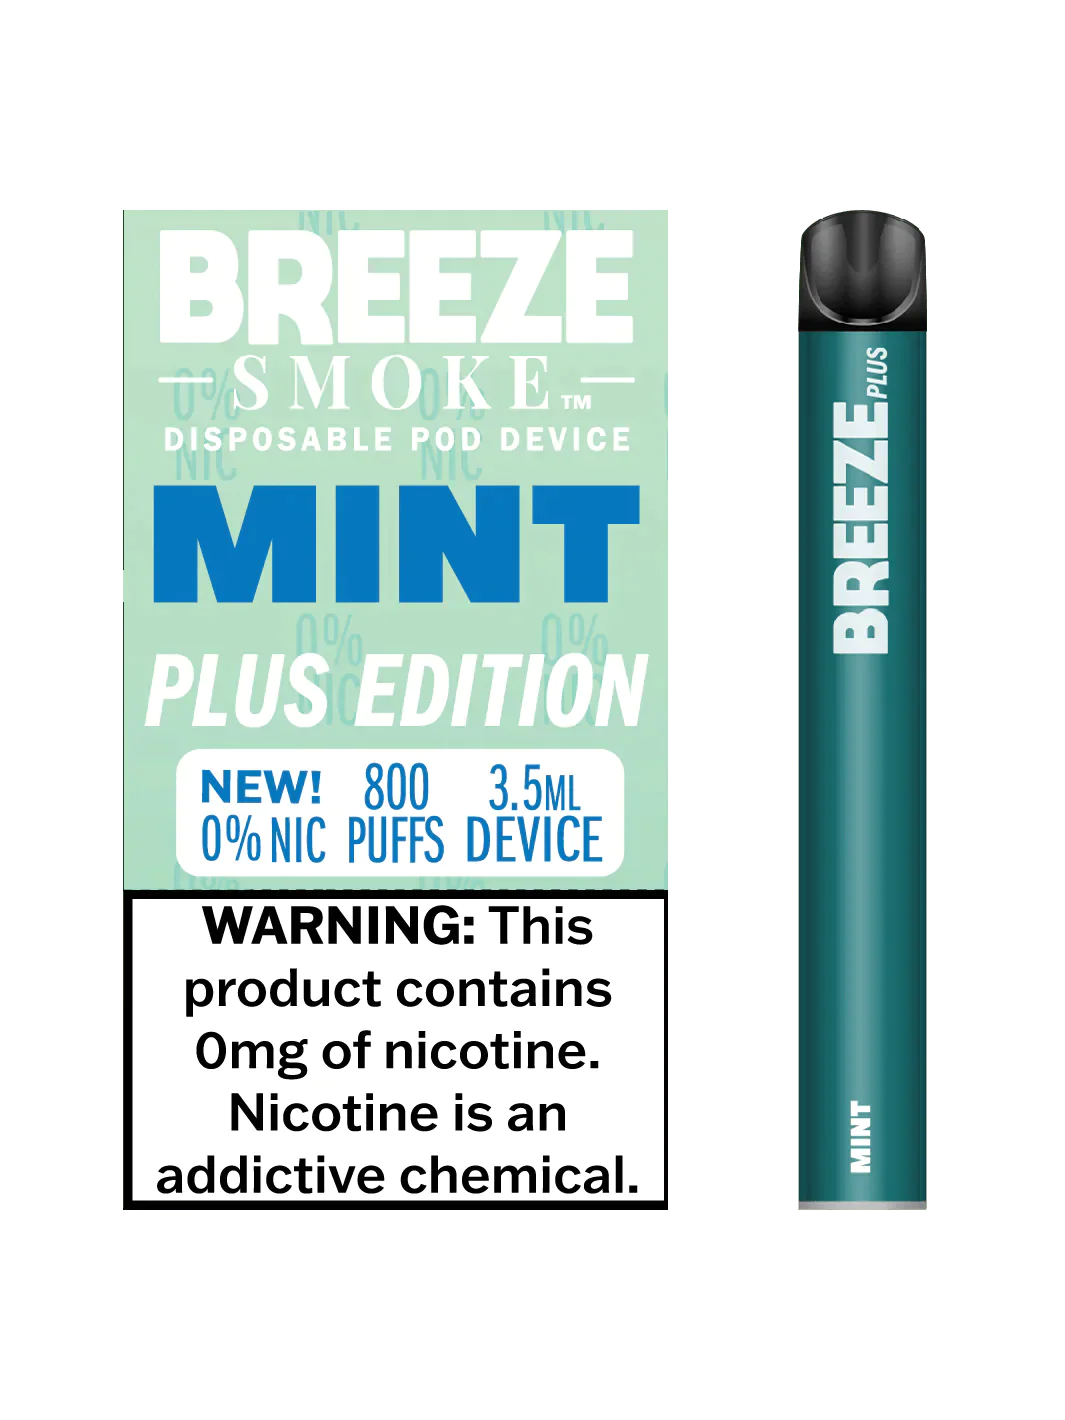 Breeze Plus Zero Nicotine - Mint